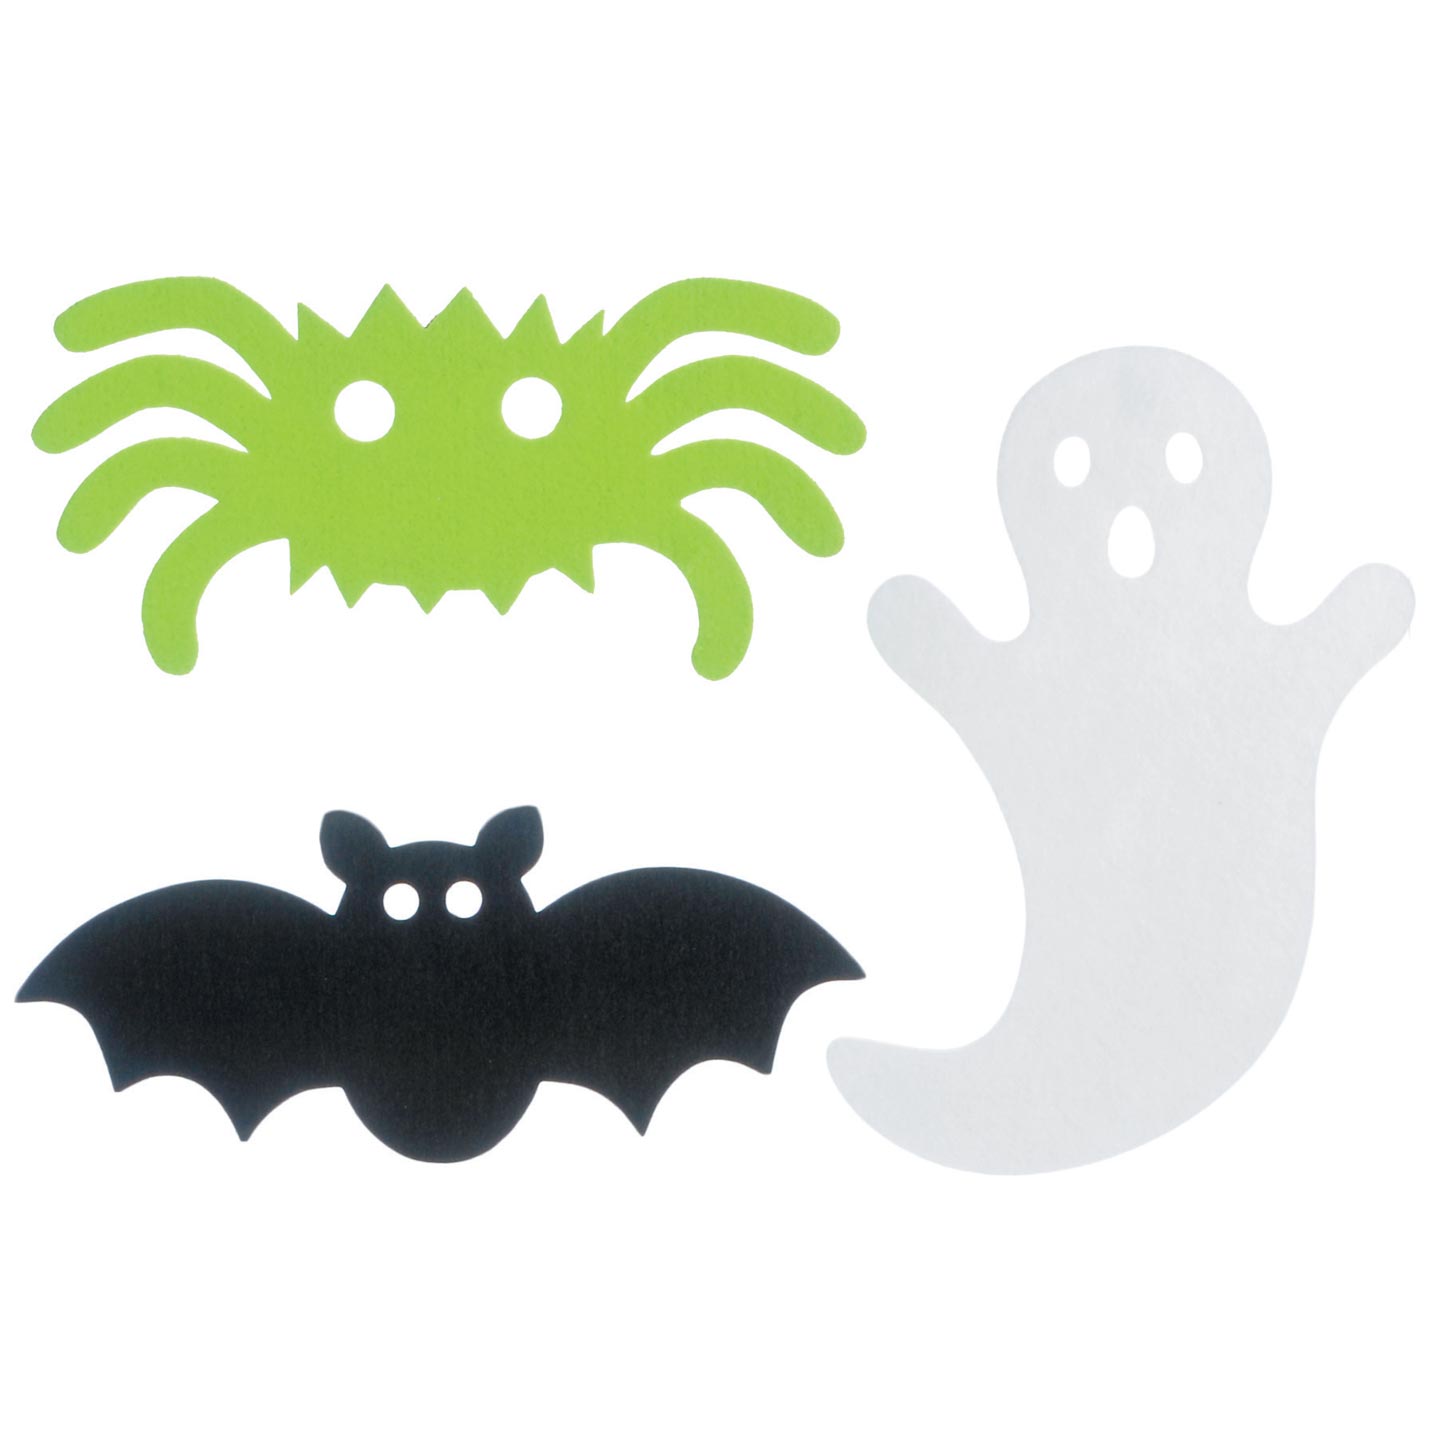 Bat Cutouts - Spider Cutouts - Ghost Cutouts - Halloween Decorations